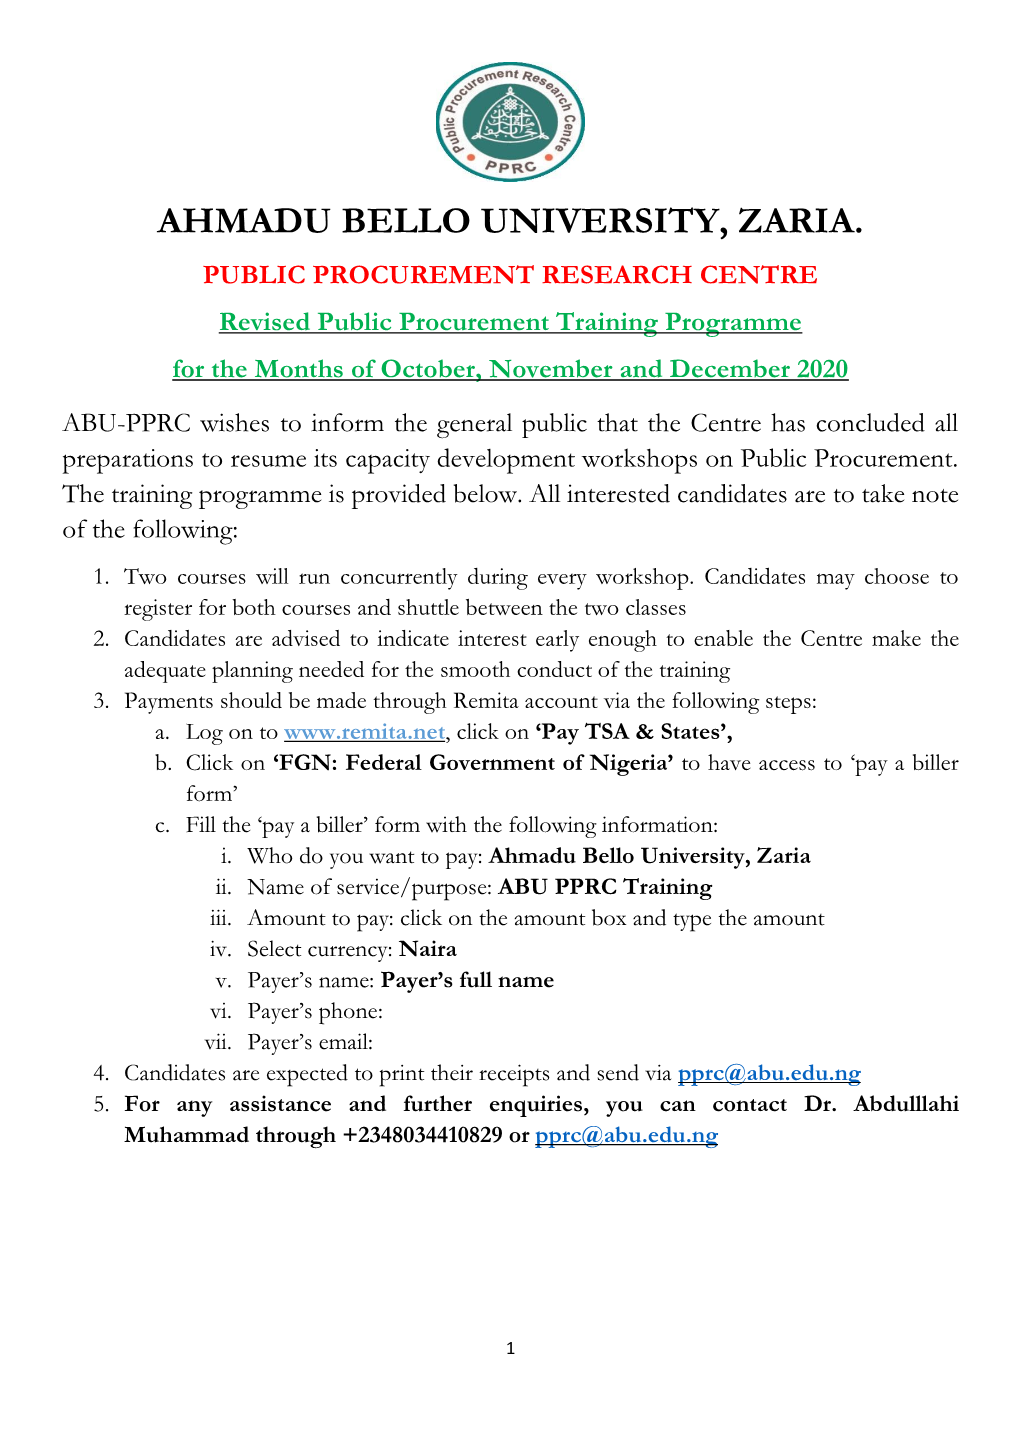 Ahmadu Bello University, Zaria. Public Procurement Research Centre